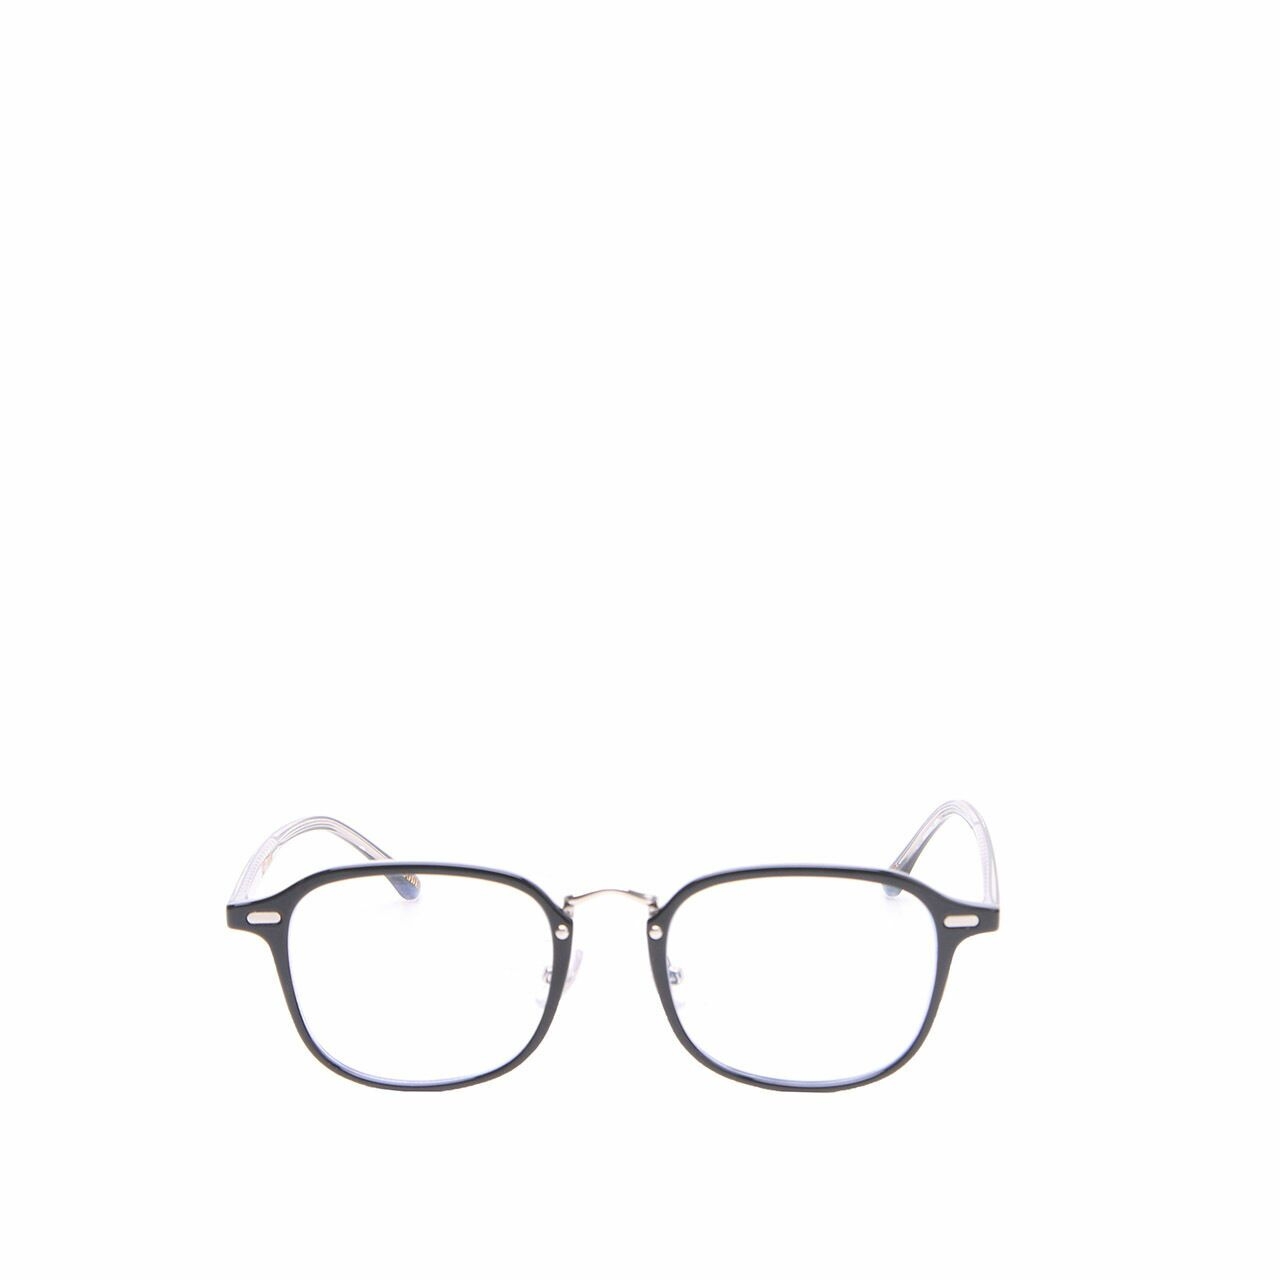 HSF x TYNA "New Aquarians" In Black Clear Eyeglasses